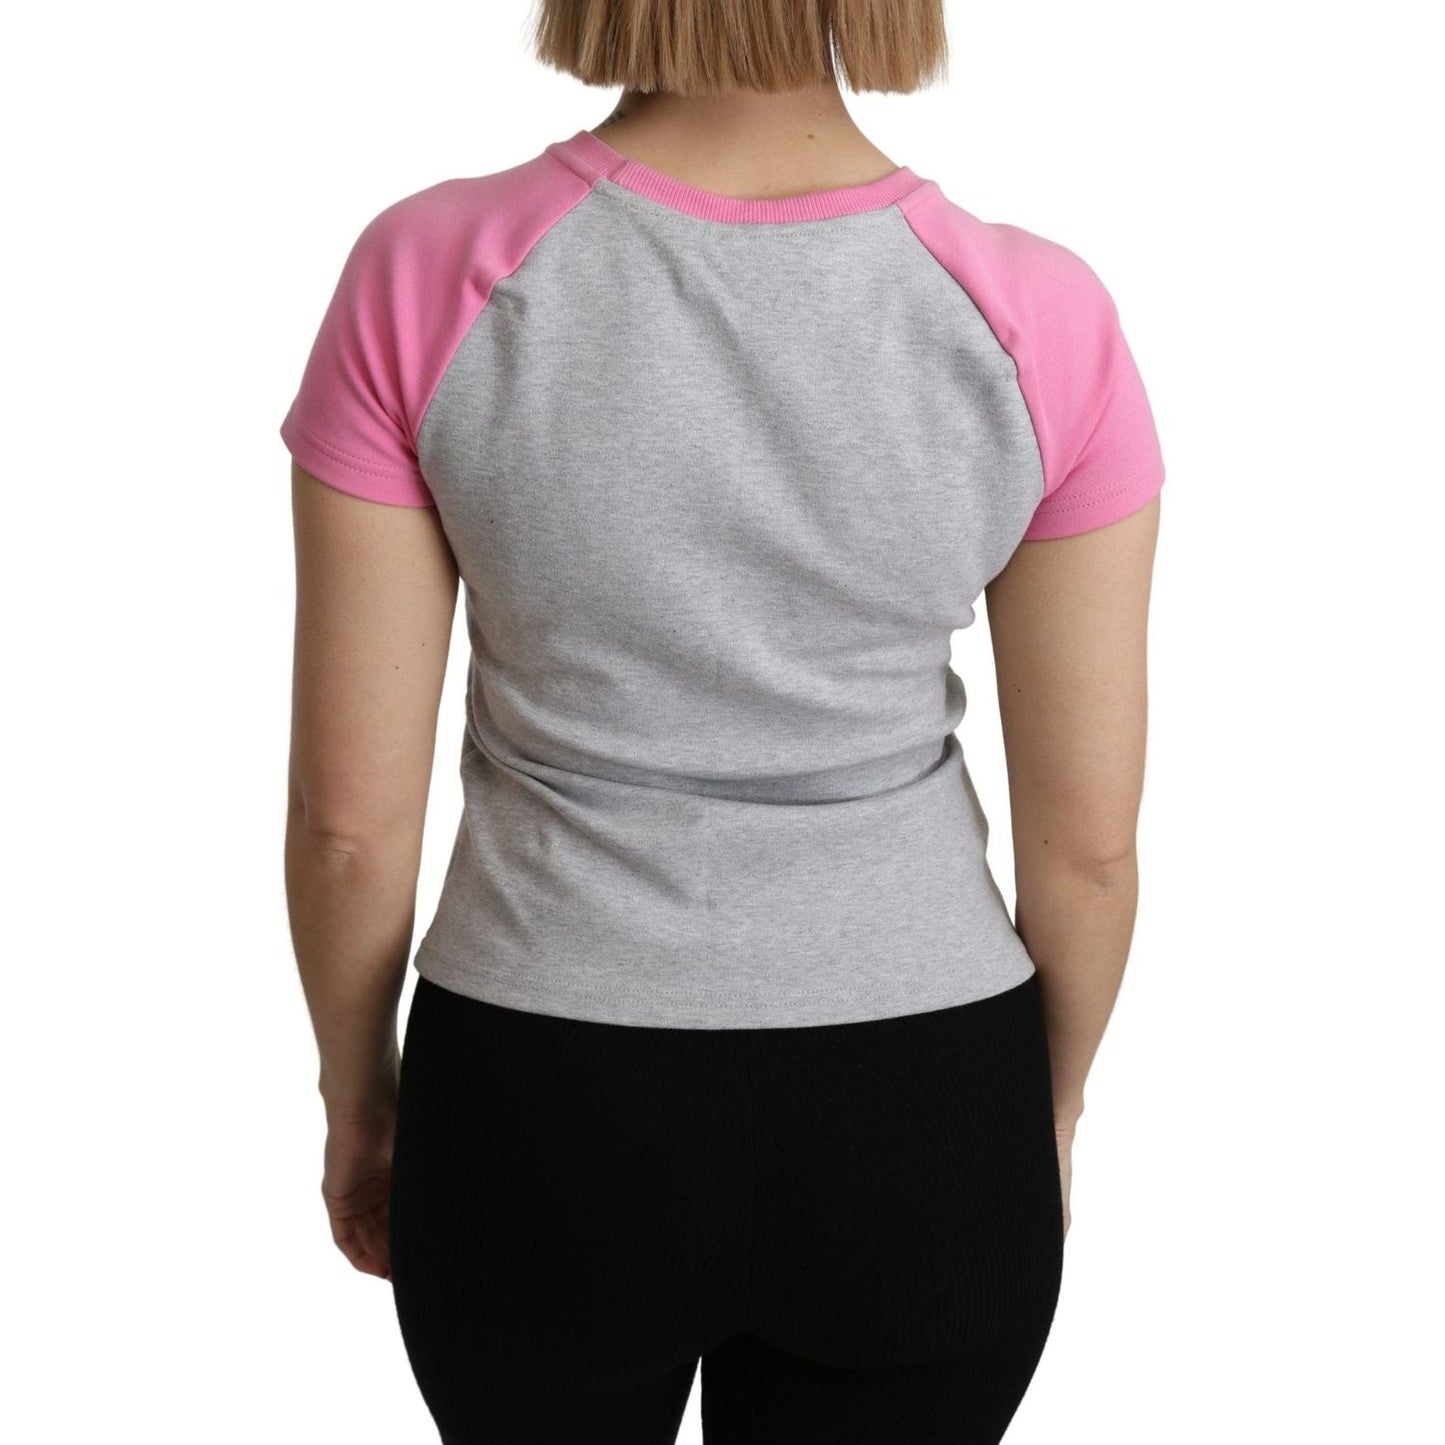 Moschino Chic Gray Crew Neck Cotton T-shirt with Pink Accents gray-and-pink-cotton-t-shirt-my-little-pony-top IMG_1483-scaled-bc084aa1-6ec.jpg